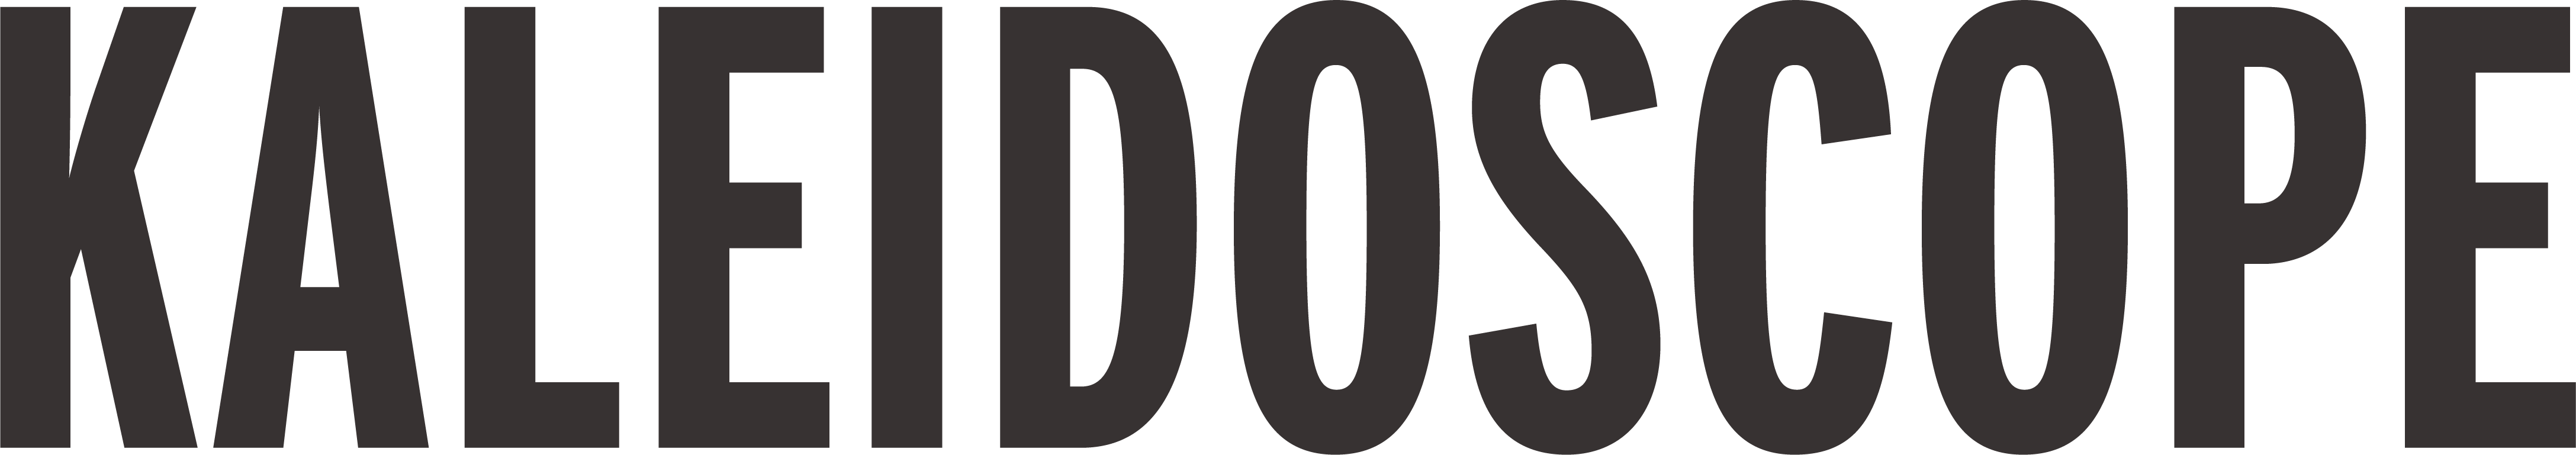 logo for Kaleidoscope